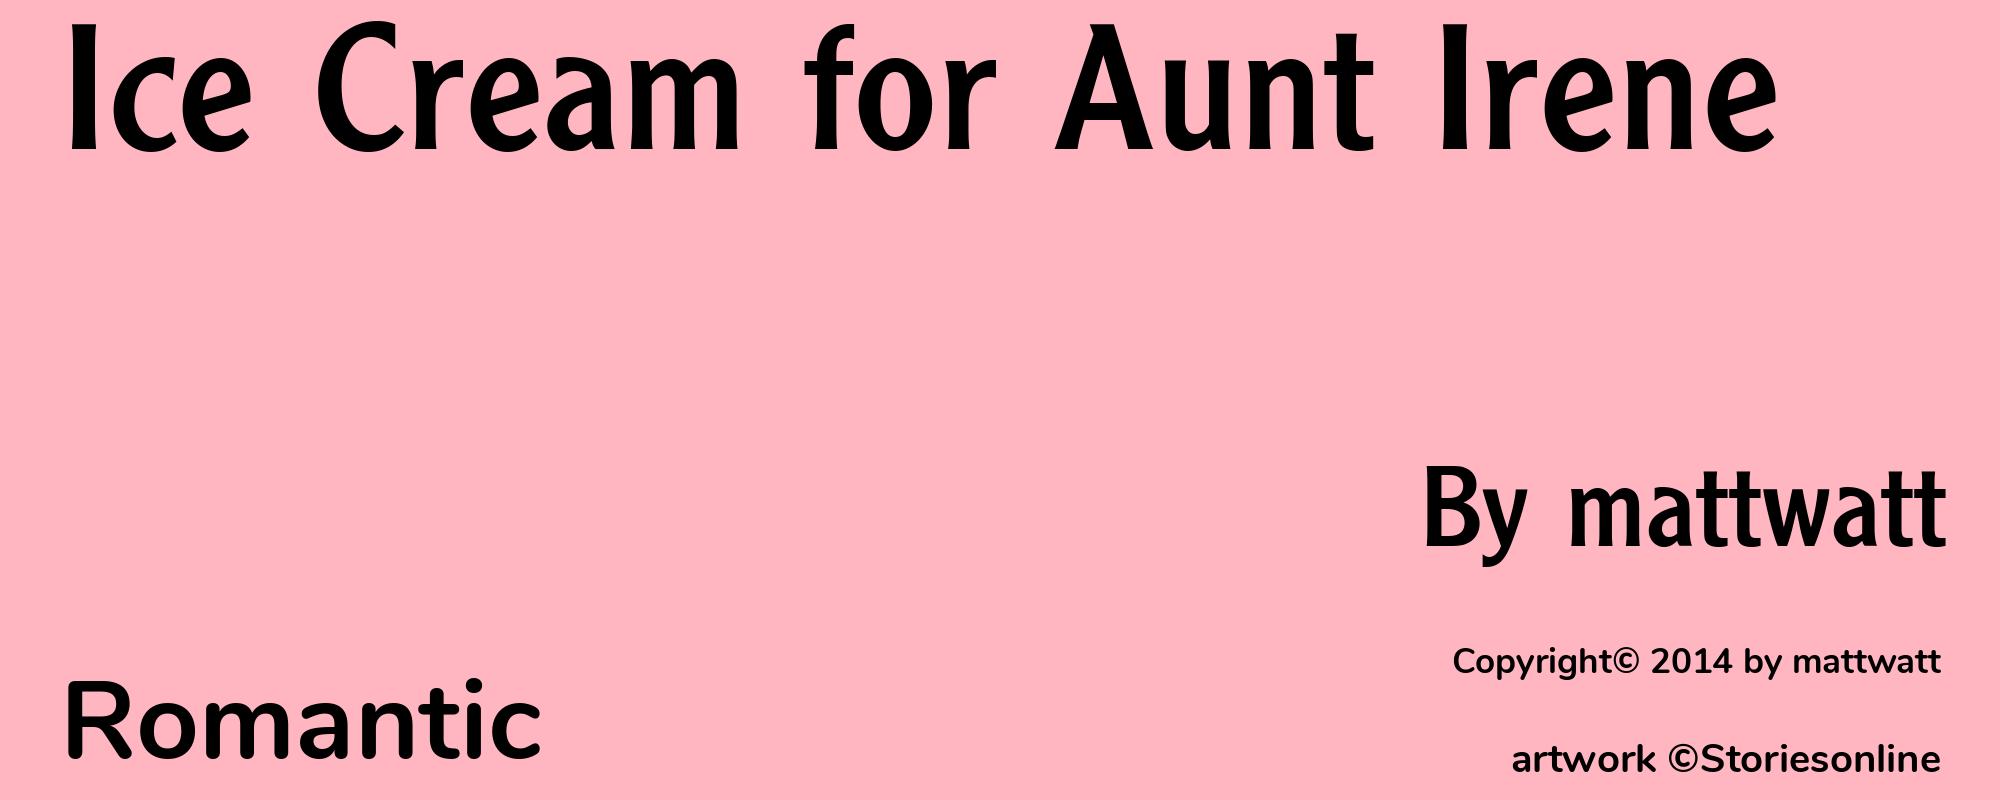 Ice Cream for Aunt Irene - Cover